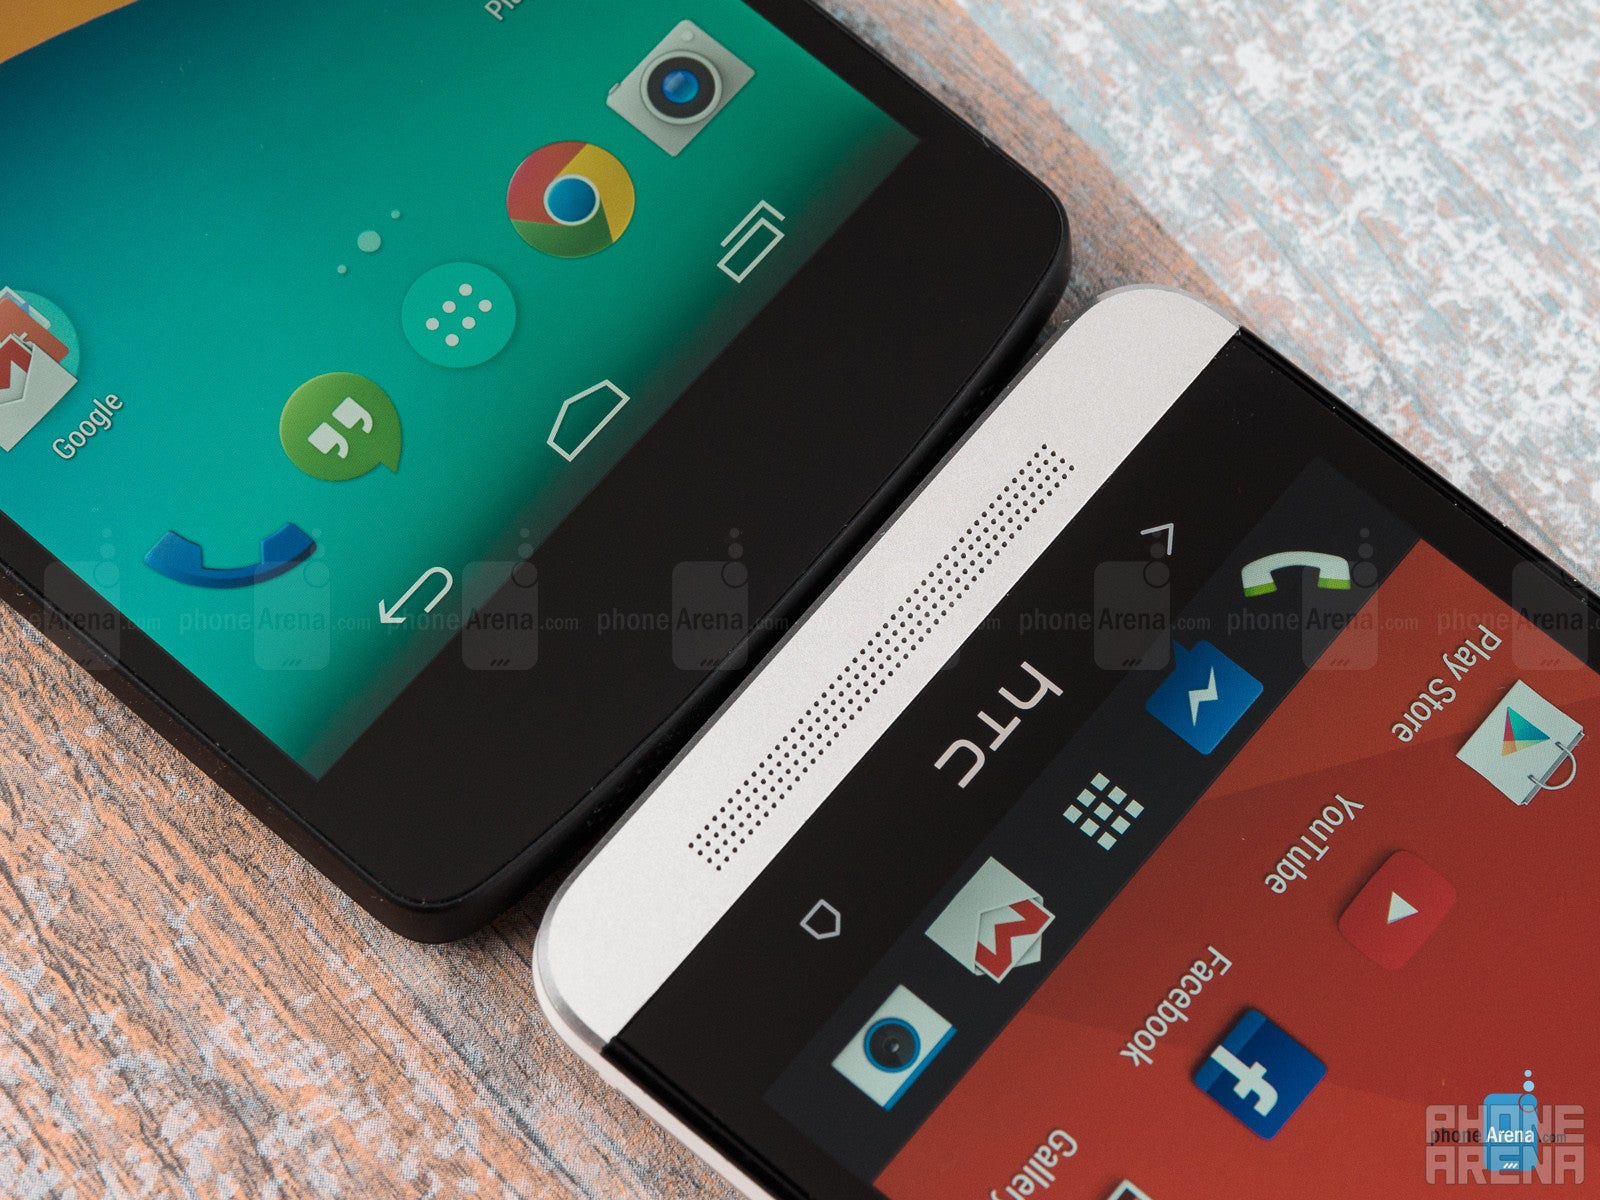 Google Nexus 5 vs HTC One